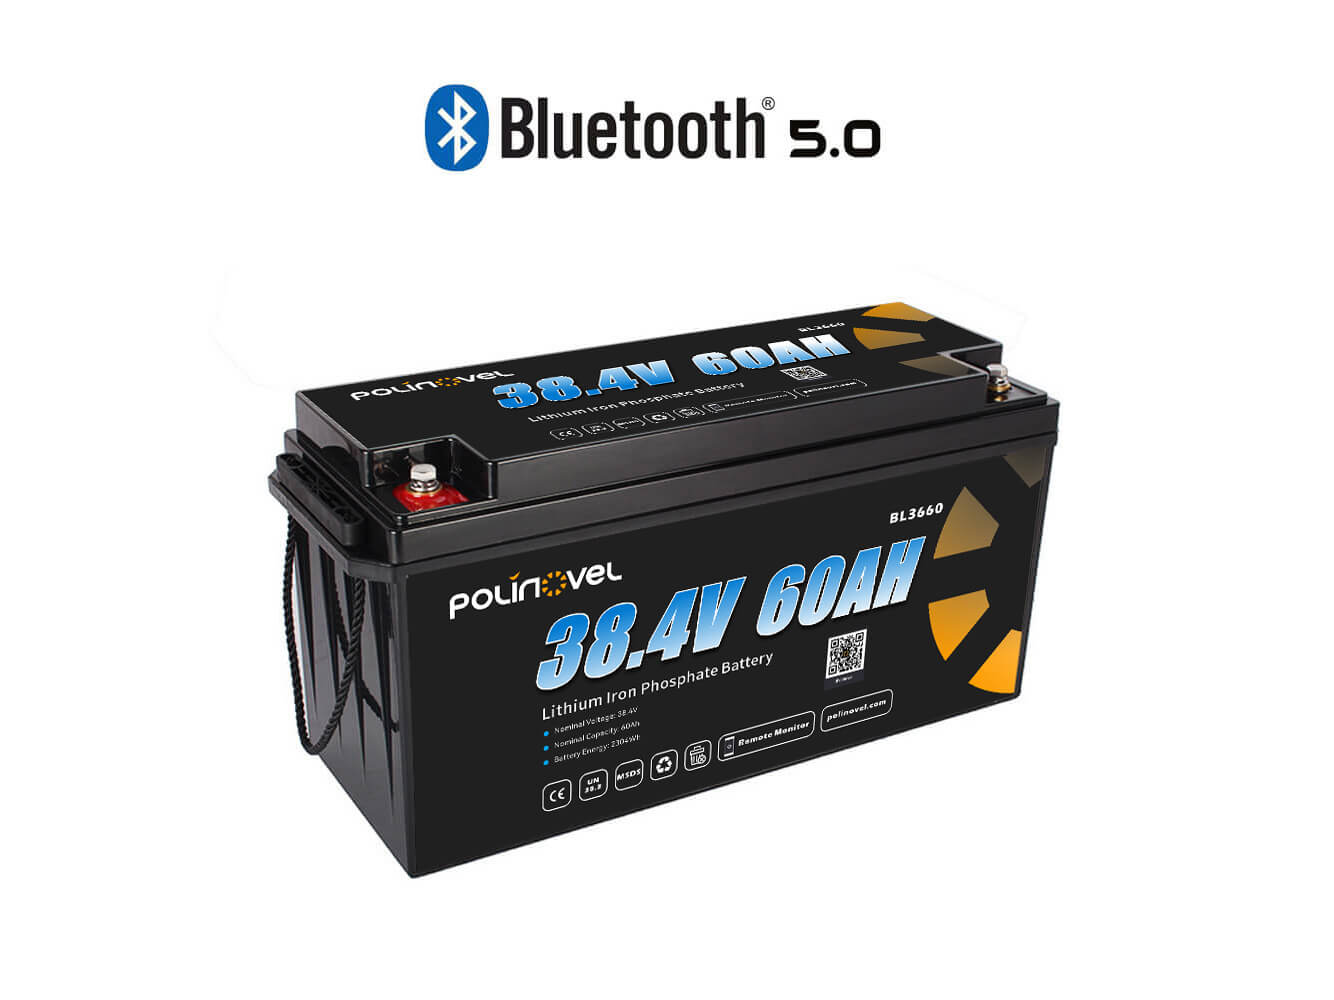 Polinovel 36V 60AH Bluetooth lithium battery